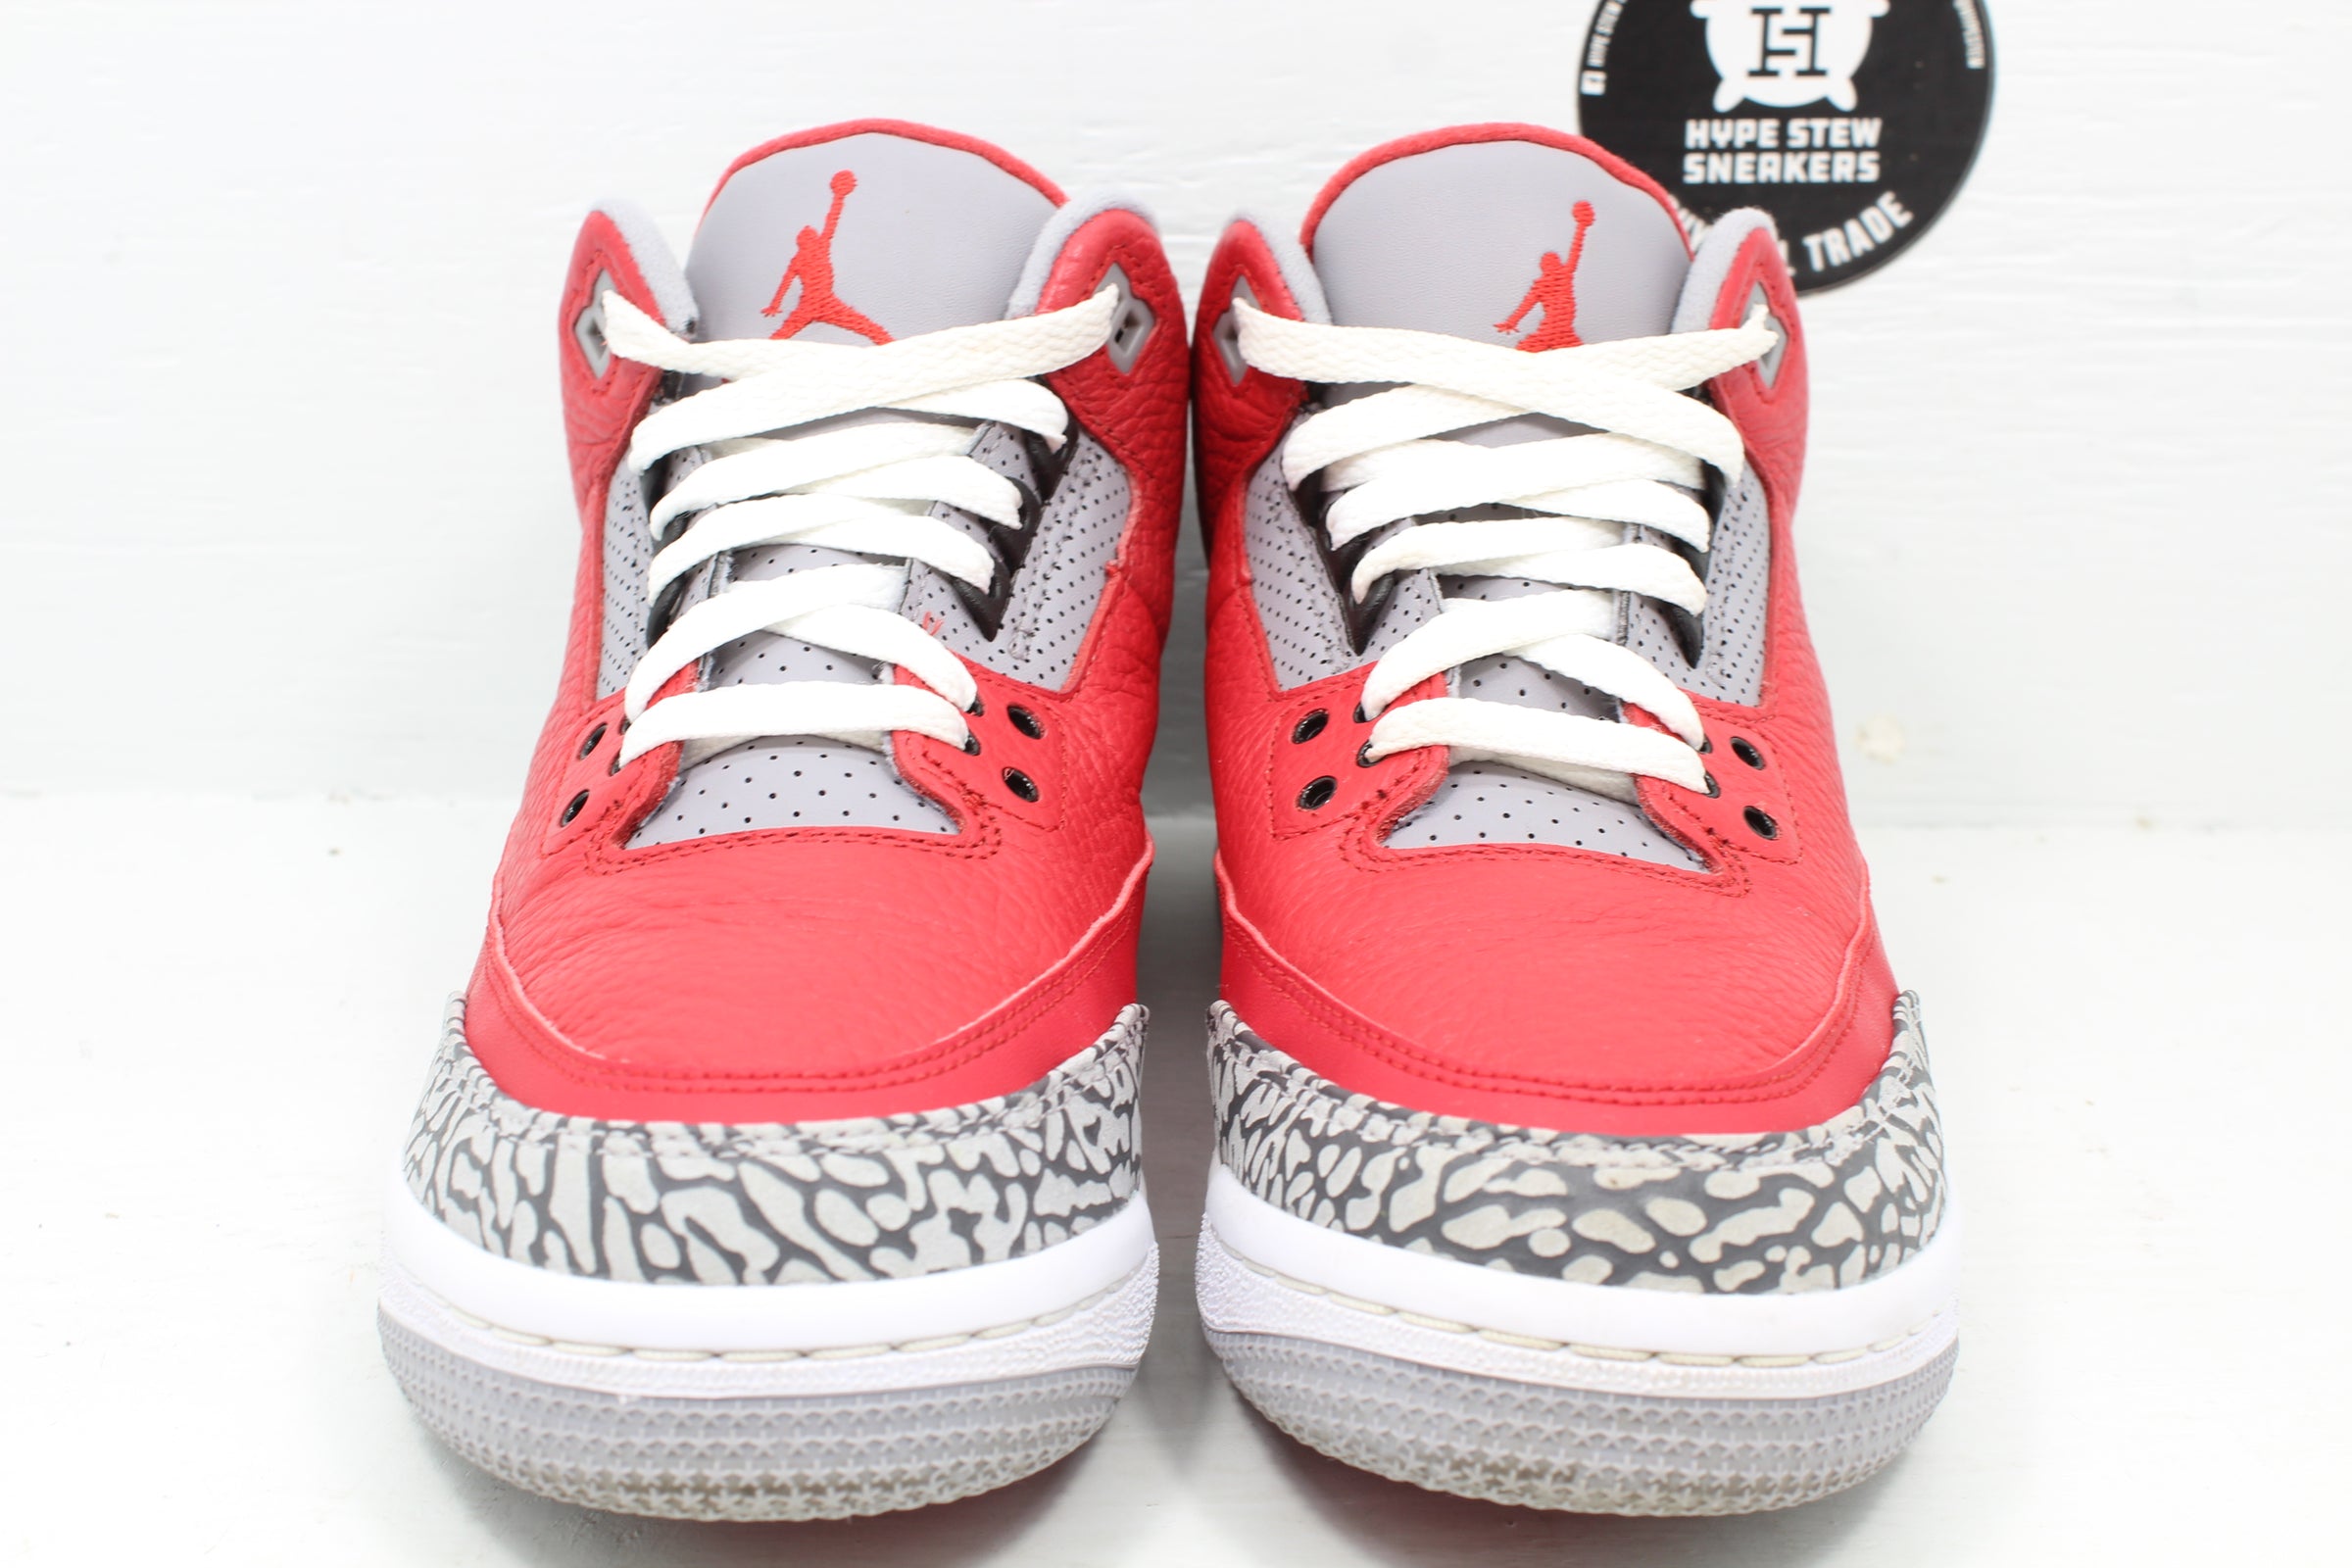 Nike Air Jordan 3 Unite Fire Red (GS) | Hype Stew Sneakers Detroit